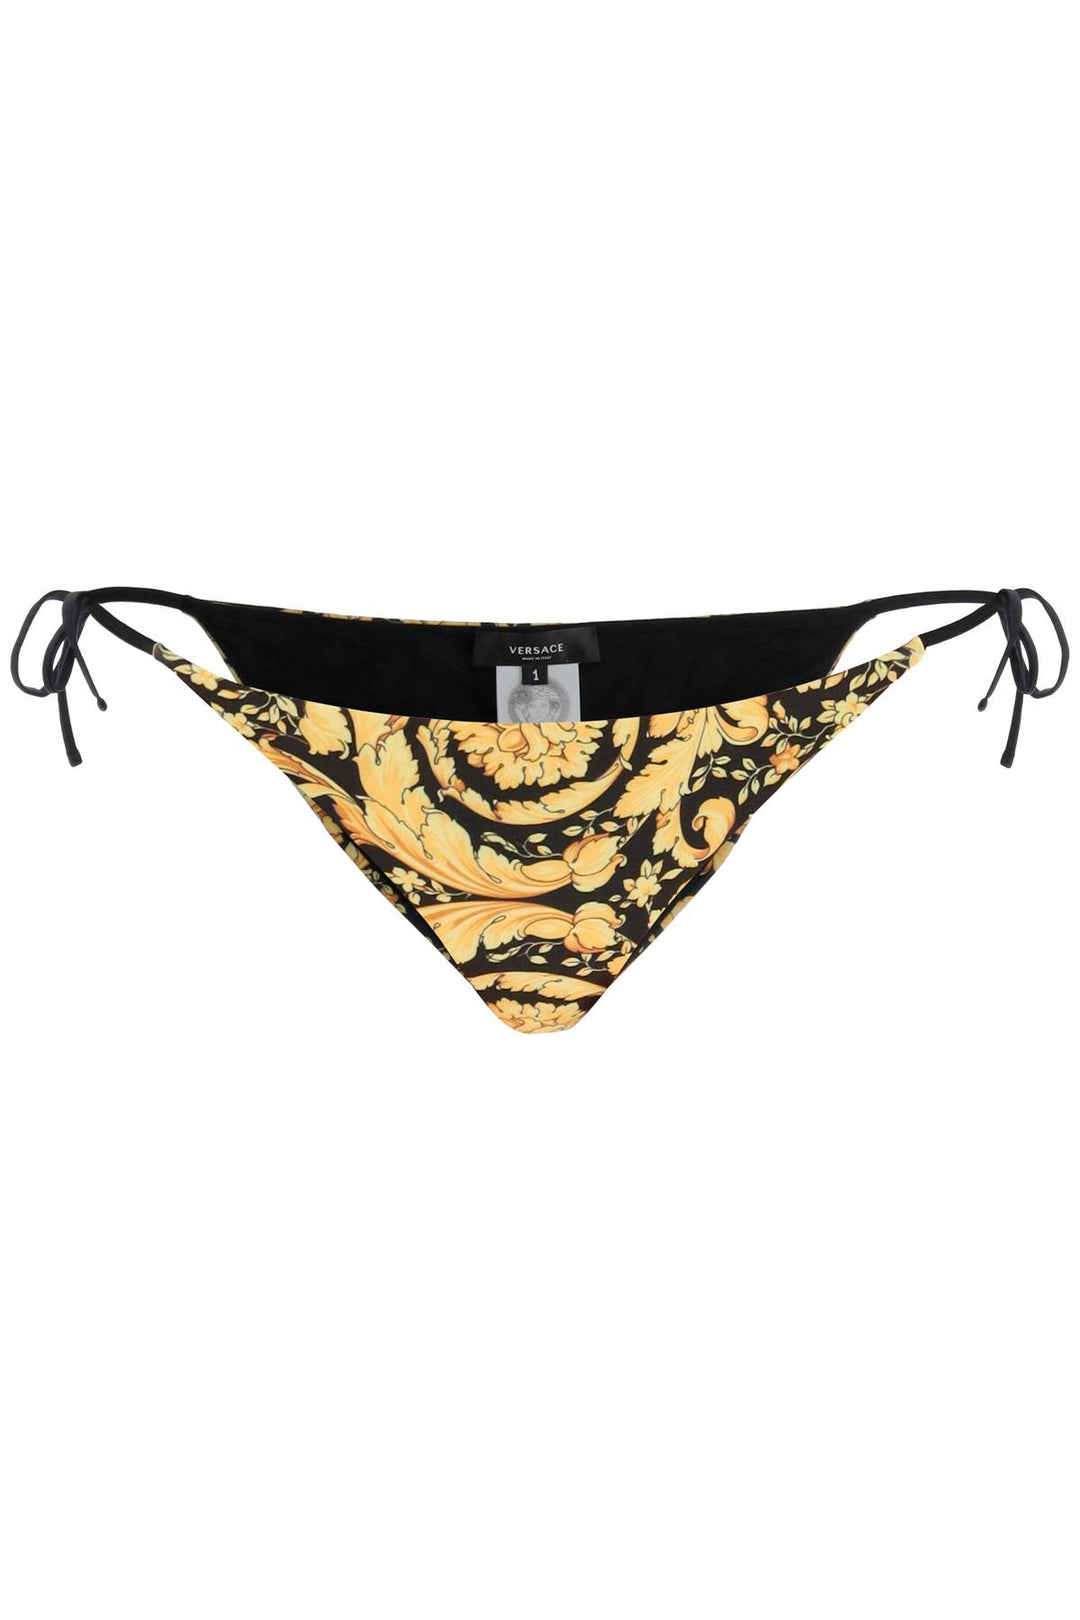 Versace Barocco Bikini Bottom   Yellow